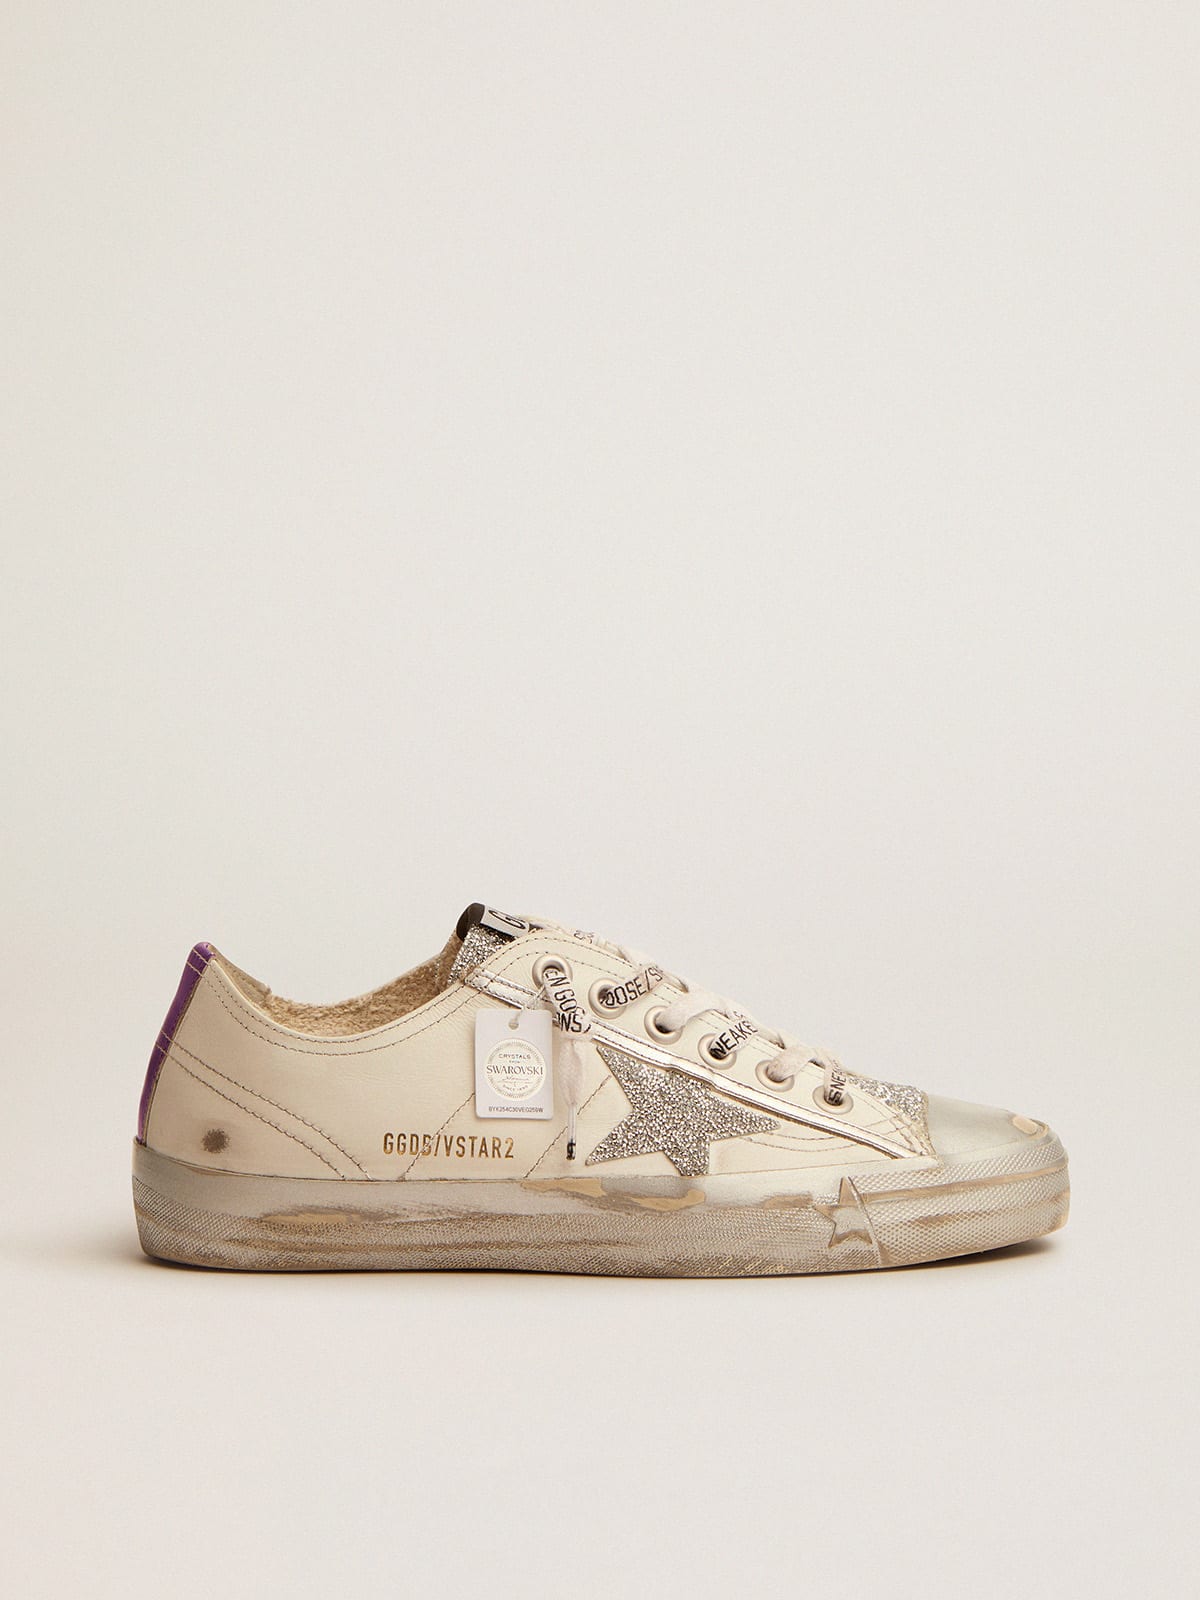 Golden Goose - V-Star LTD sneakers in white leather and Swarovski crystals in 